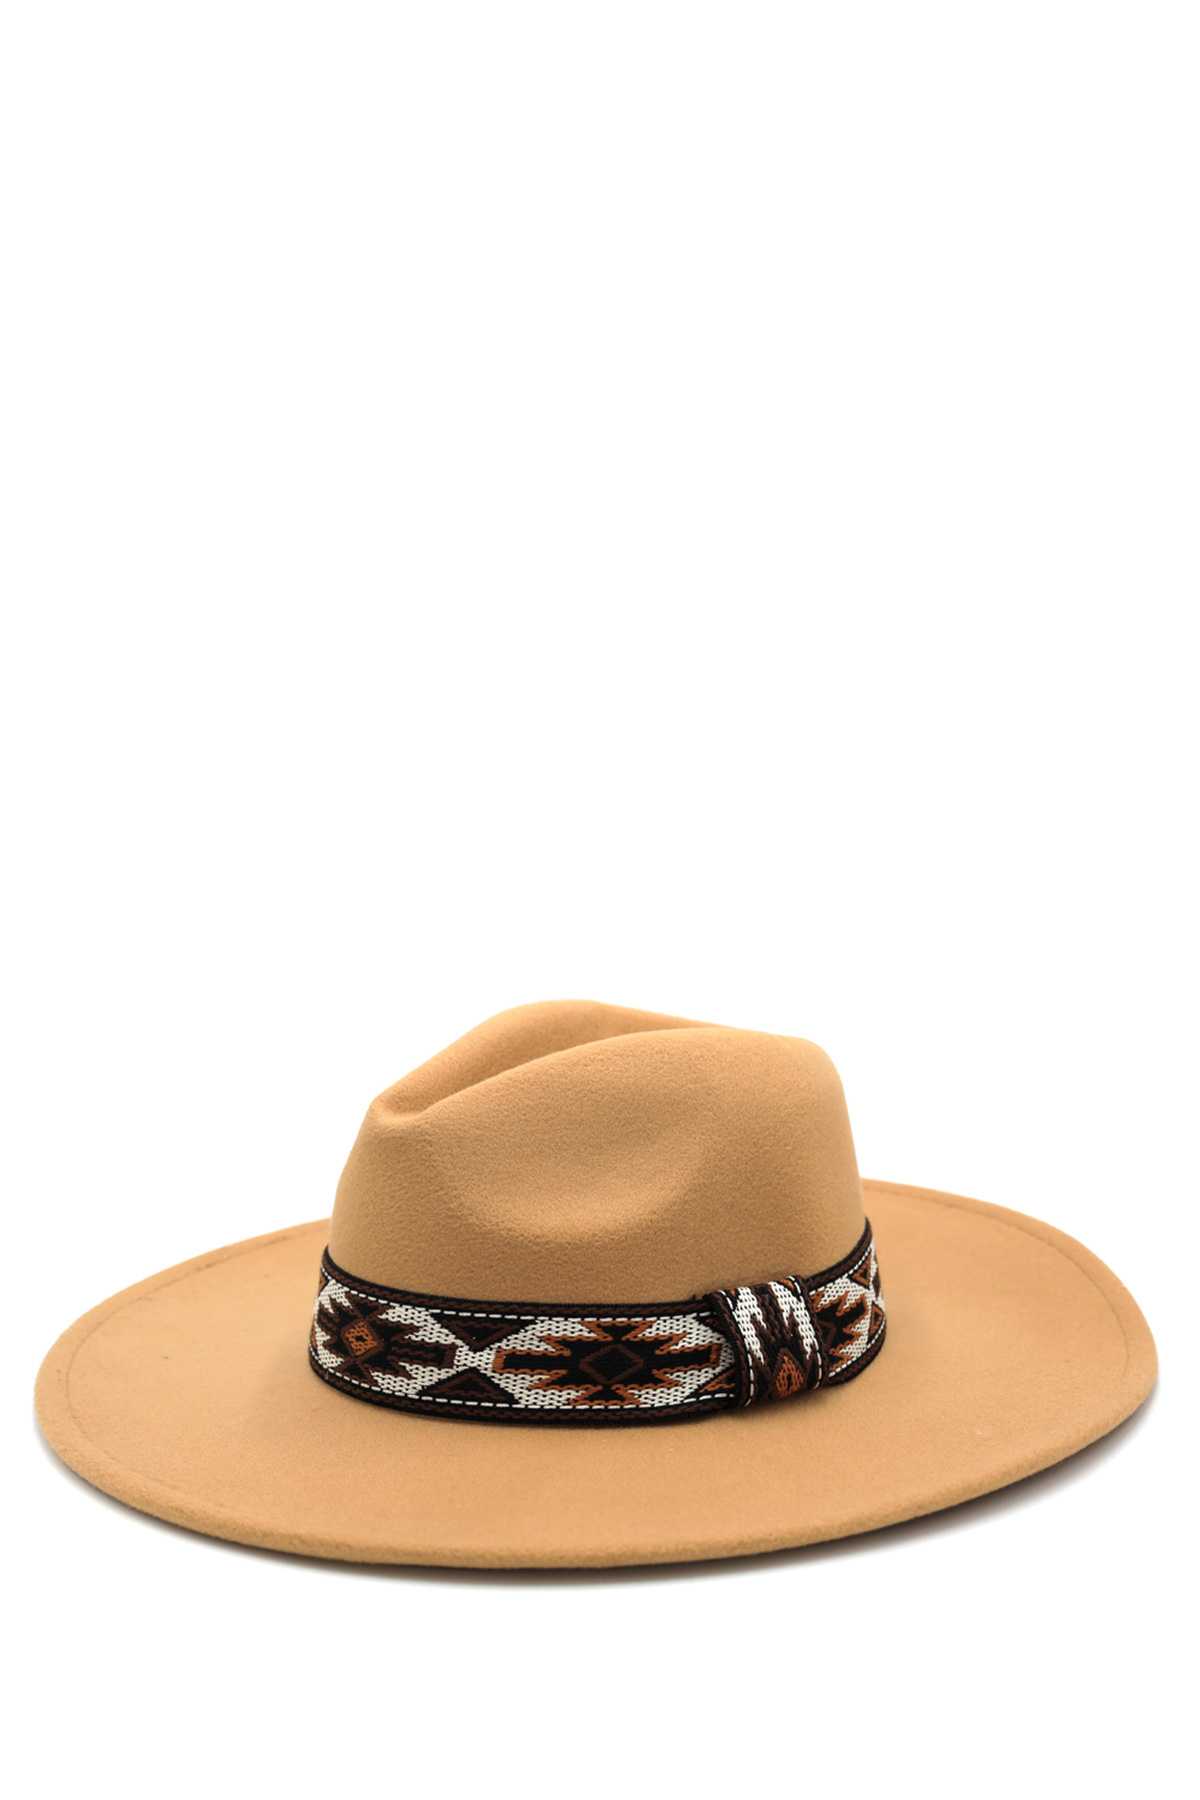 Tribal Band Panama Hat